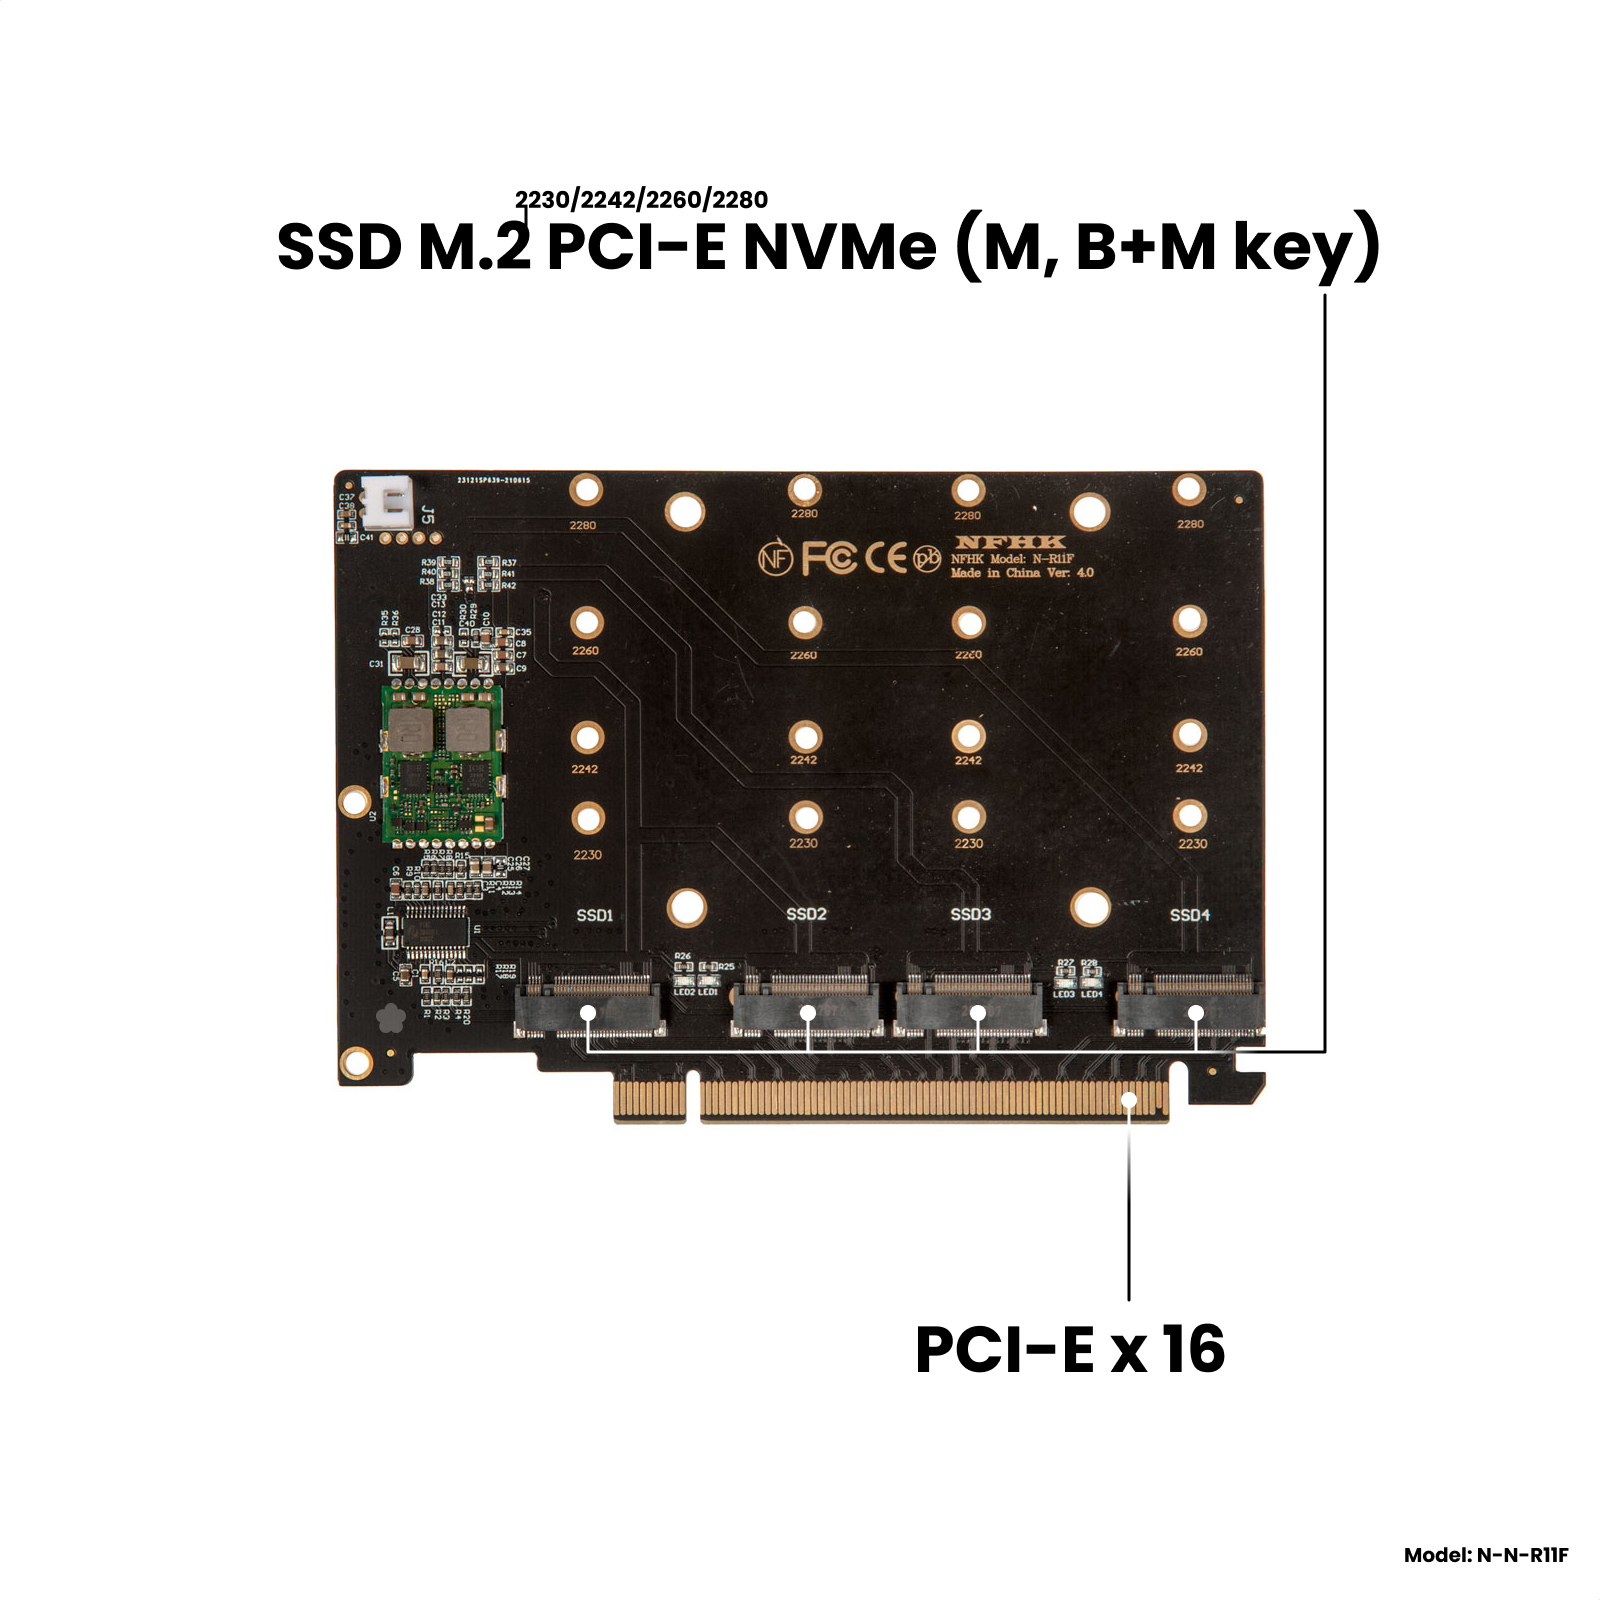 Адаптер-переходник (плата расширения) с активным охлаждением для установки 4 накопителей SSD M.2 2230-2280 PCI-E NVMe (M, B+M key) в слот PCI-E x16